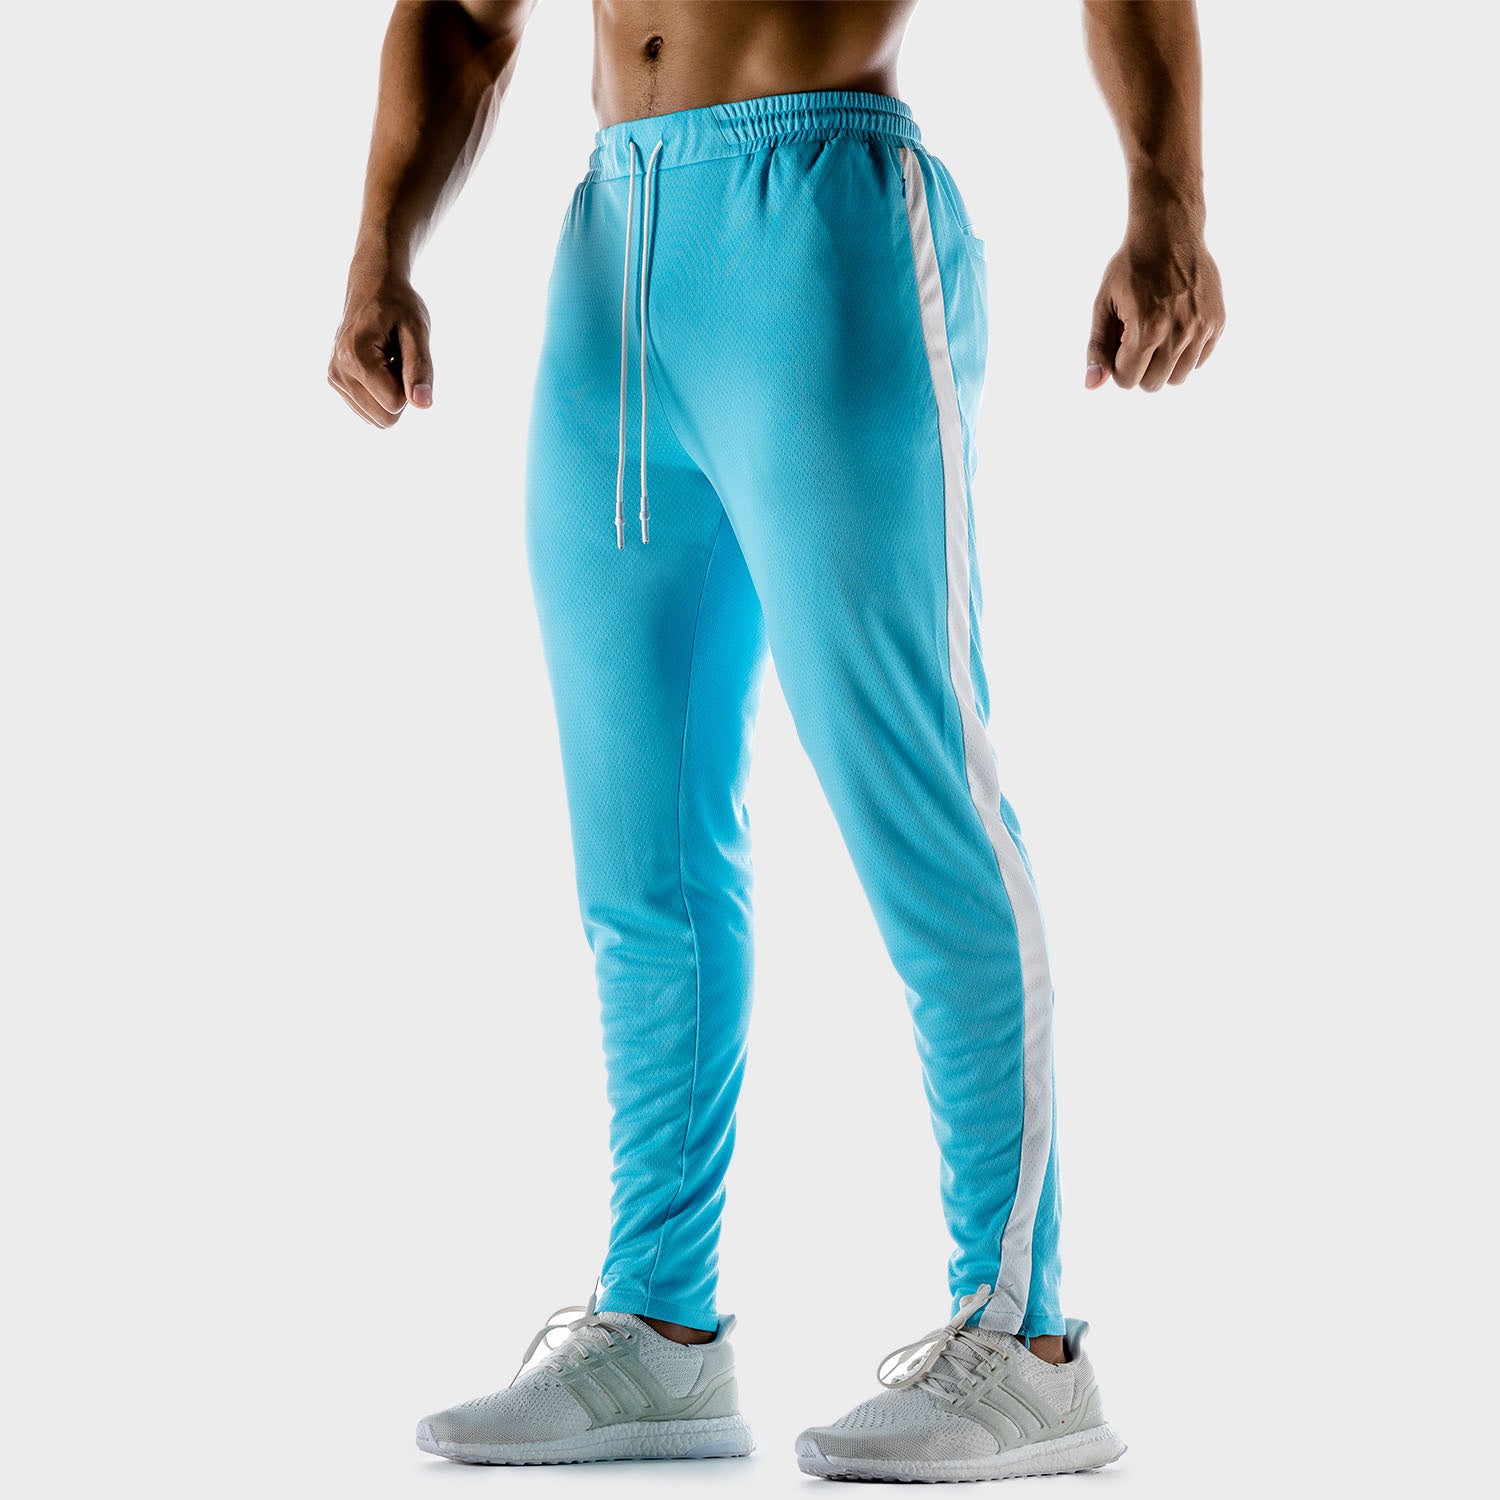 squatwolf-gym-wear-hybrid-2-0-track-pants-blue-workout-pants-for-men